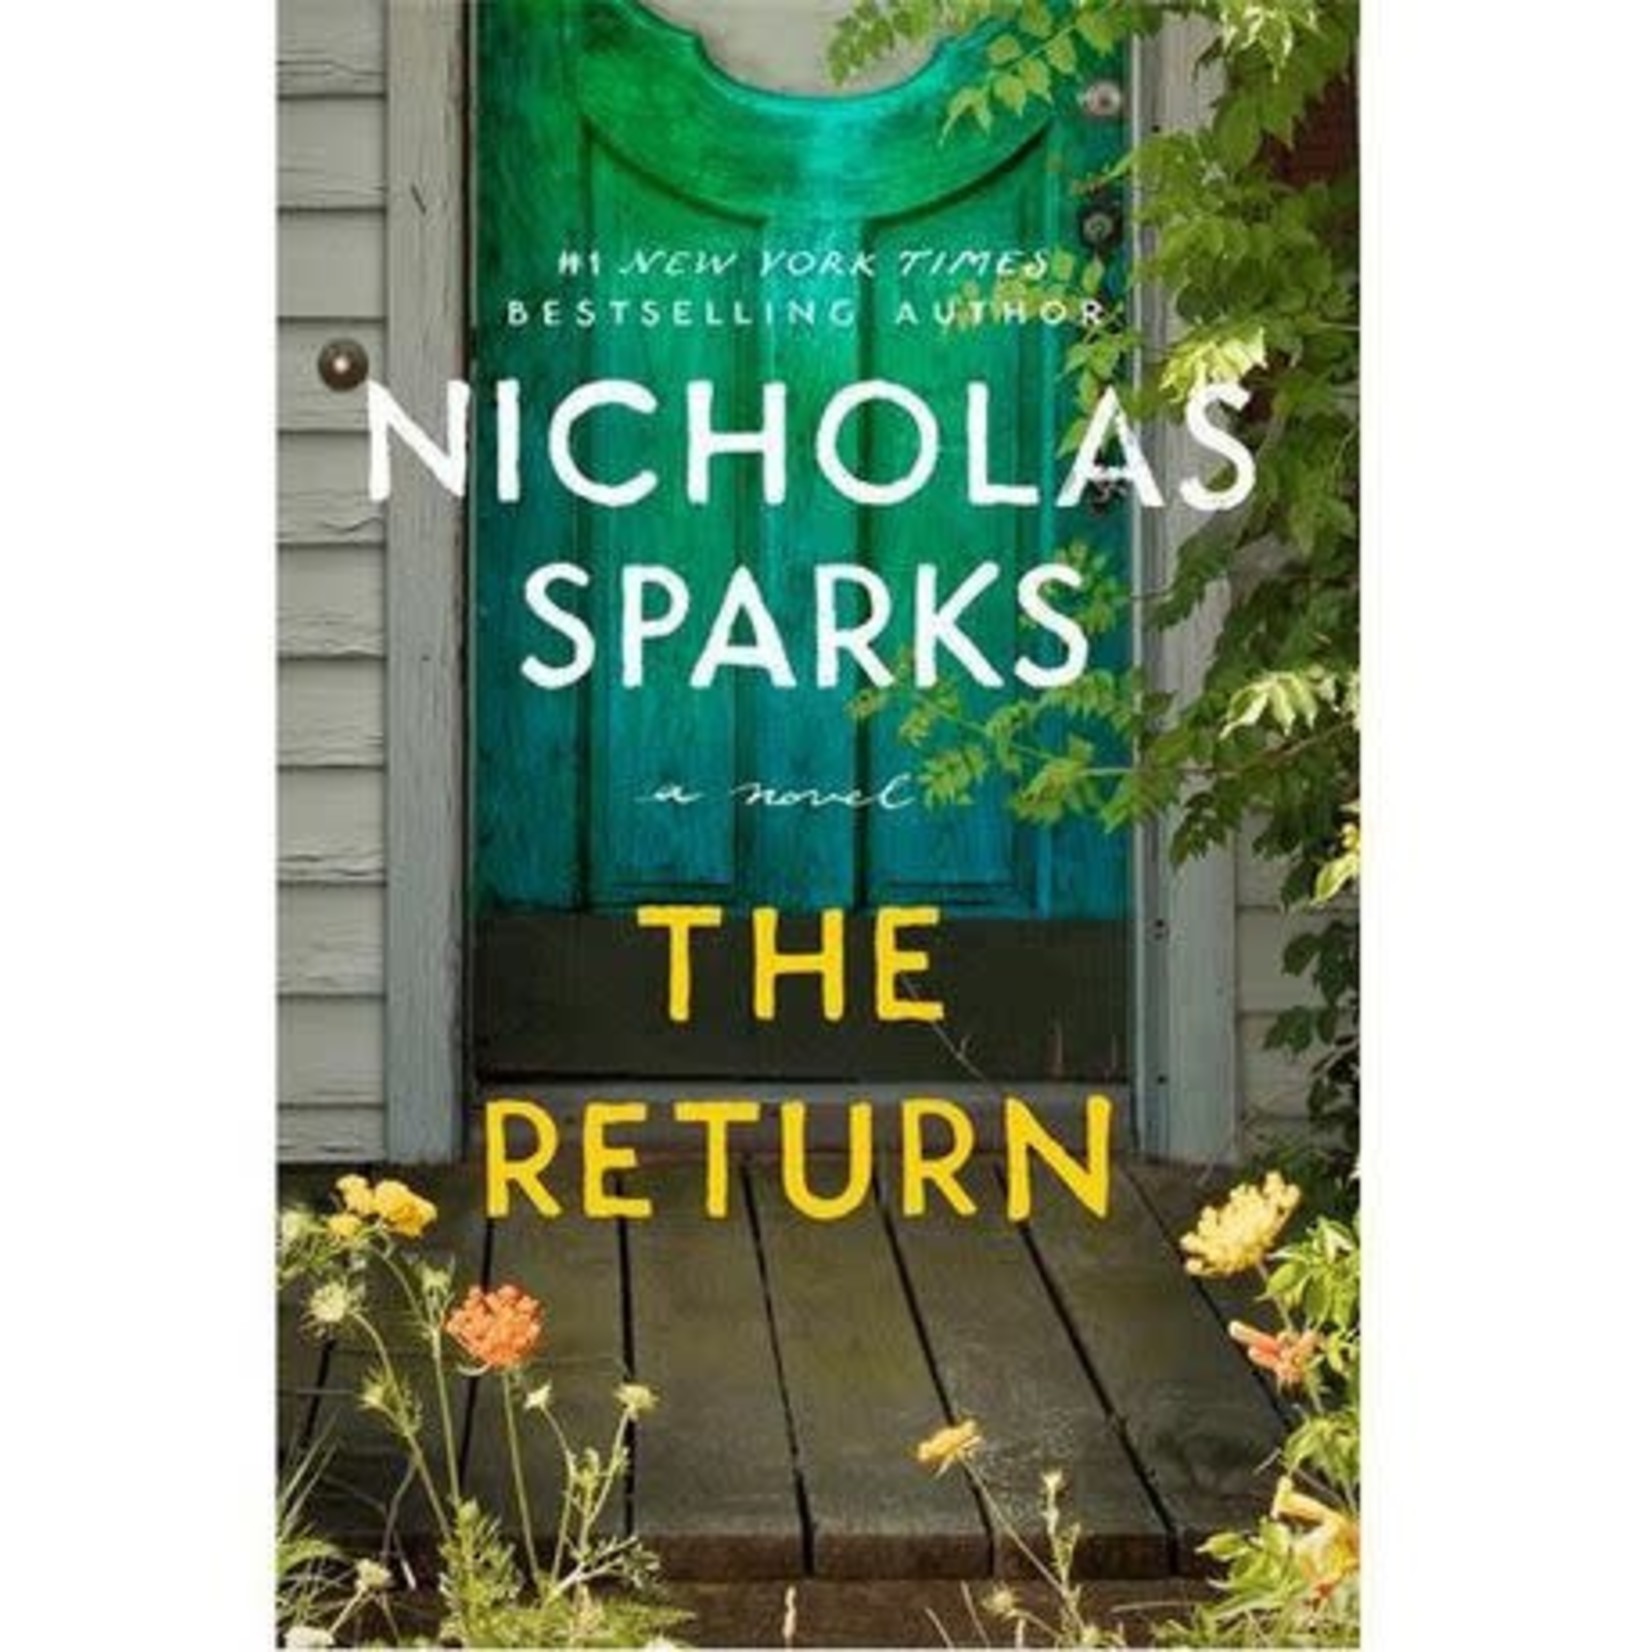 Nicholas Sparks The Return